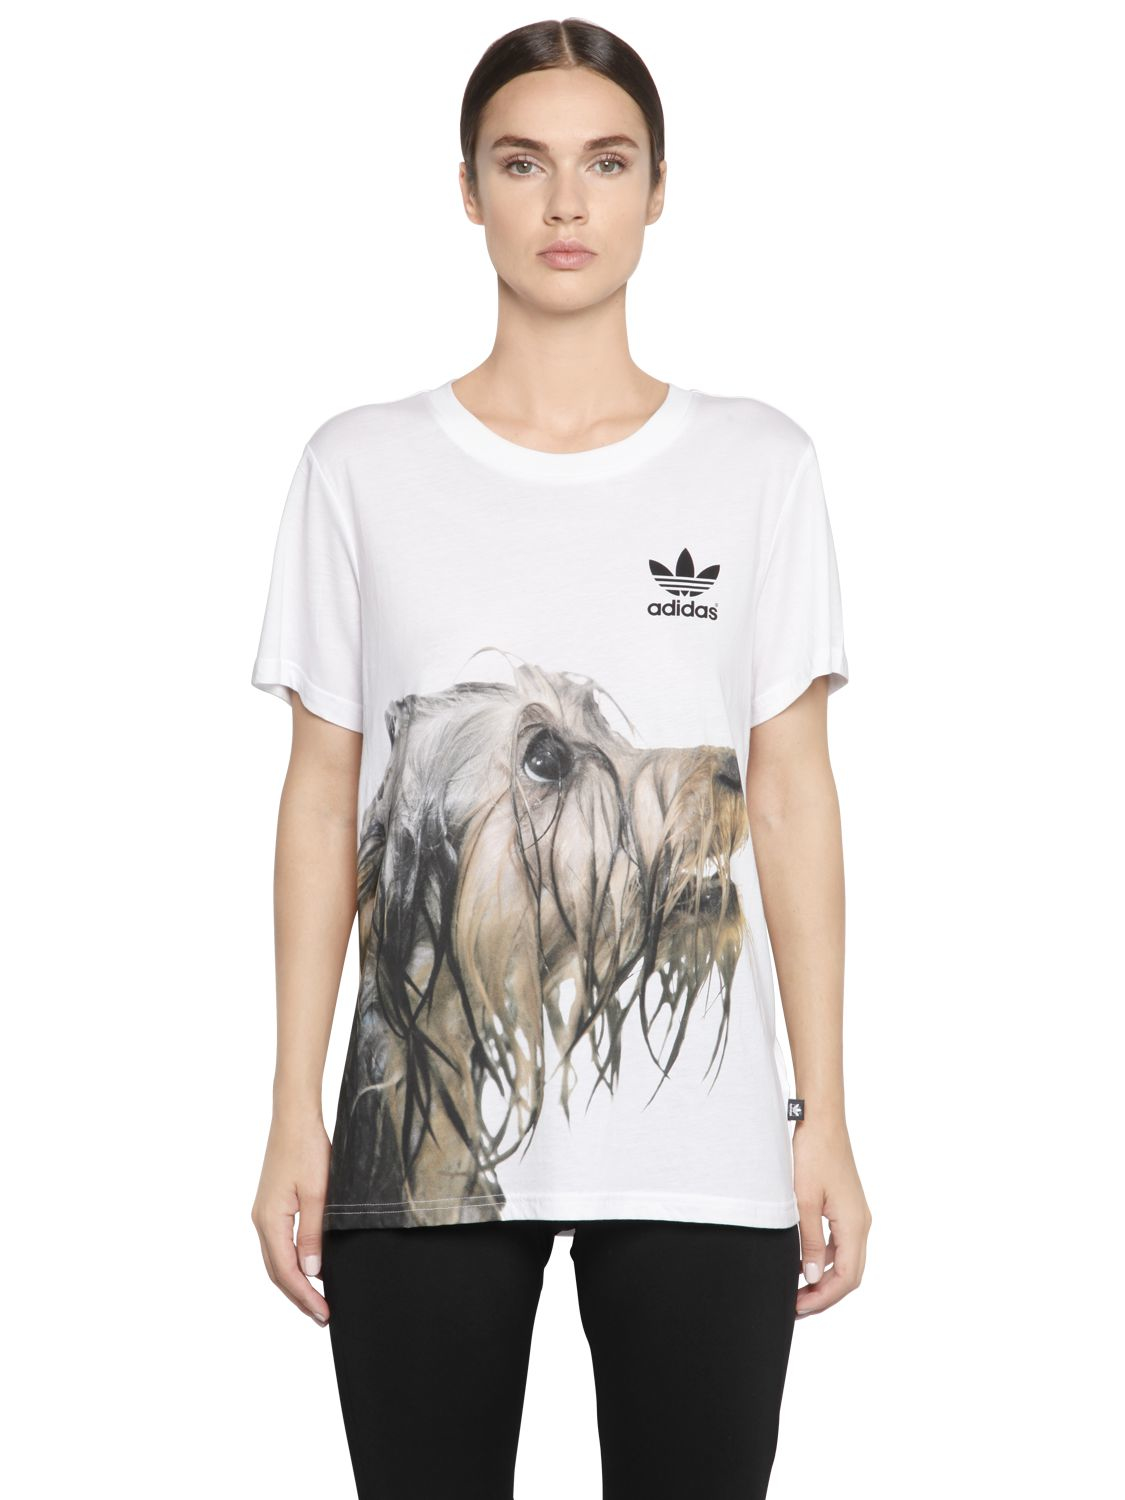 Adidas Dog Shirt Store, 53% OFF | kcsa.com.pa